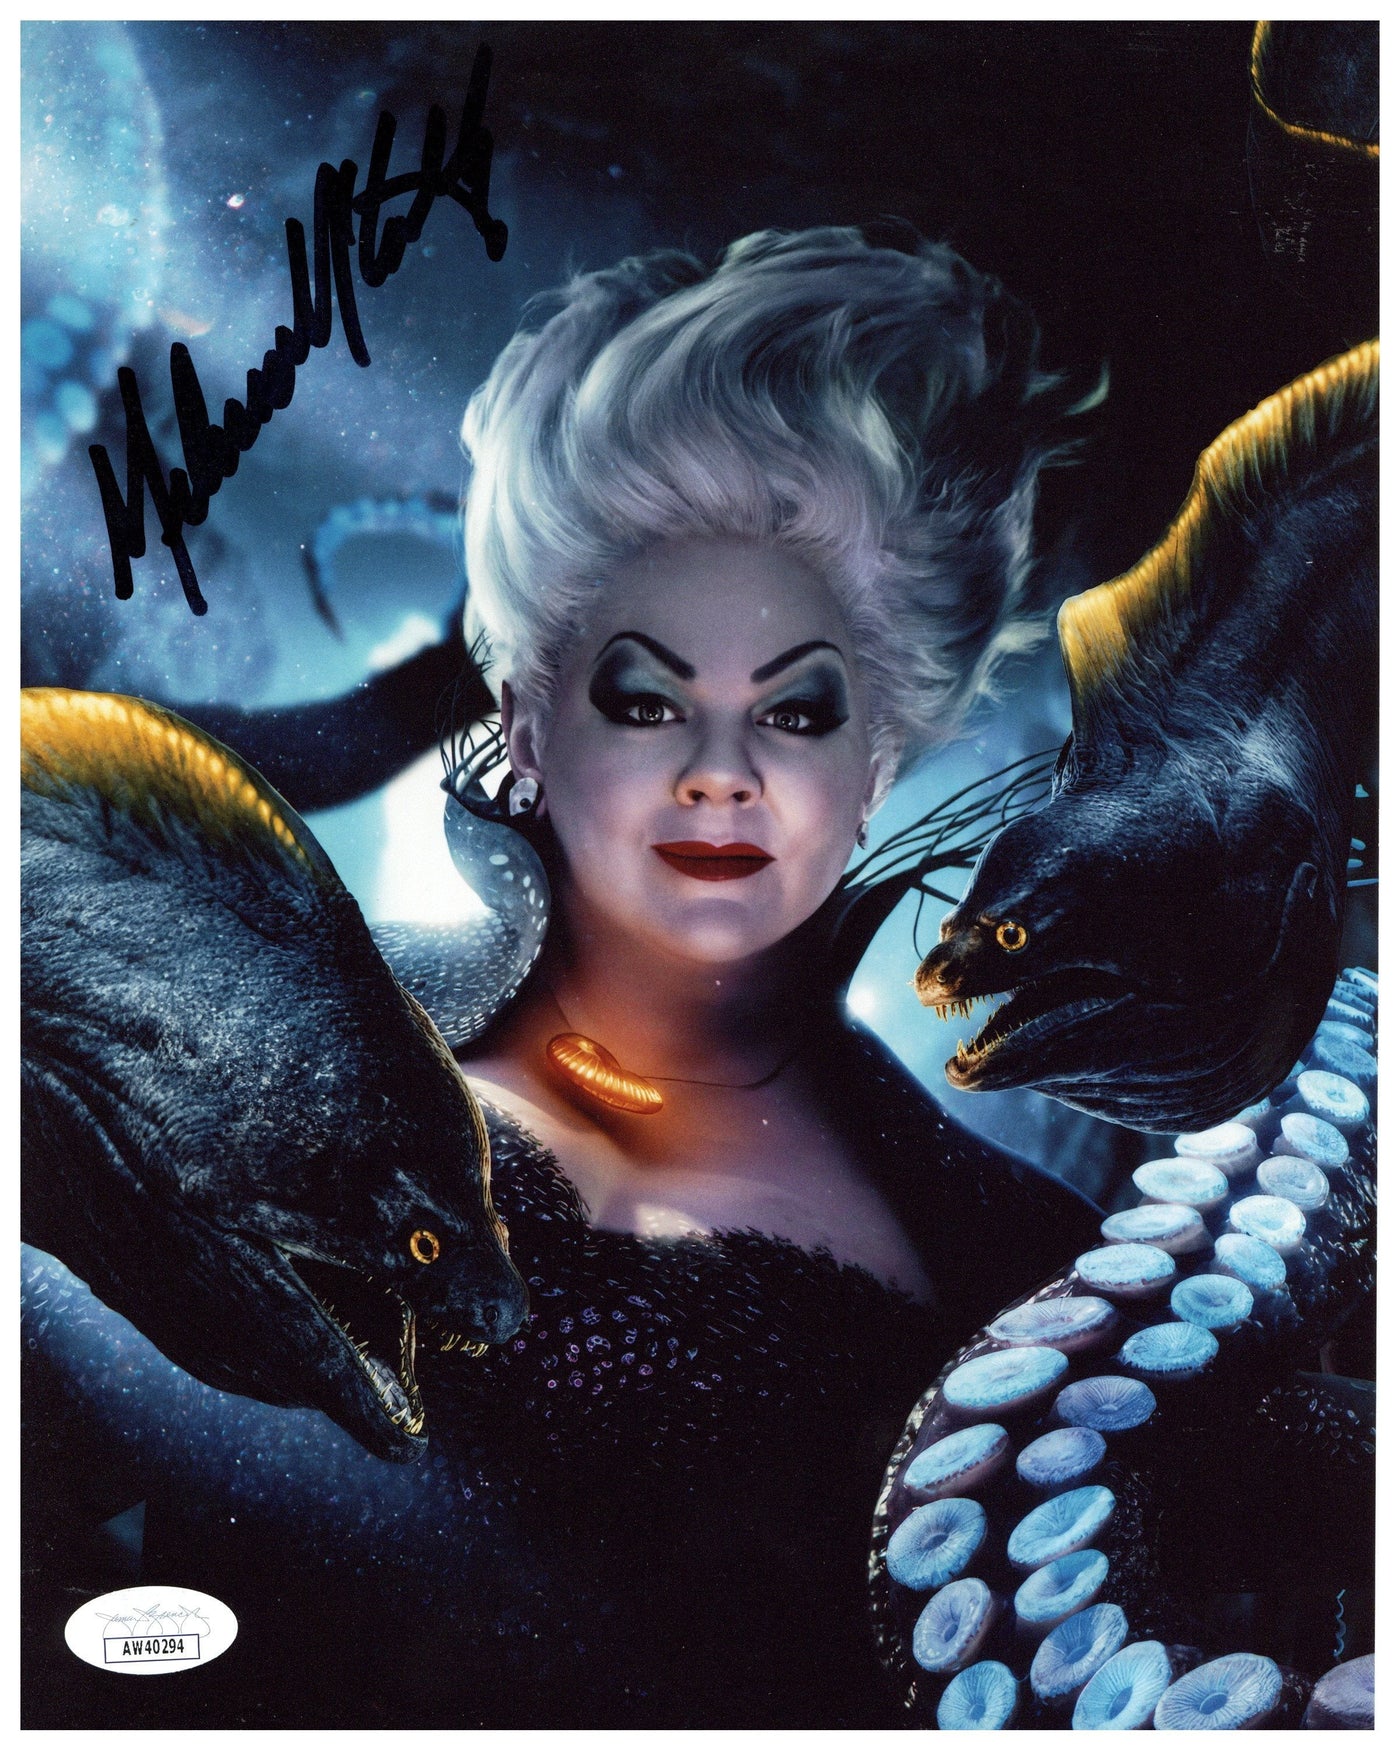 Melissa McCarthy Signed 8x10 Photo The Little Mermaid Autographed JSA COA #4